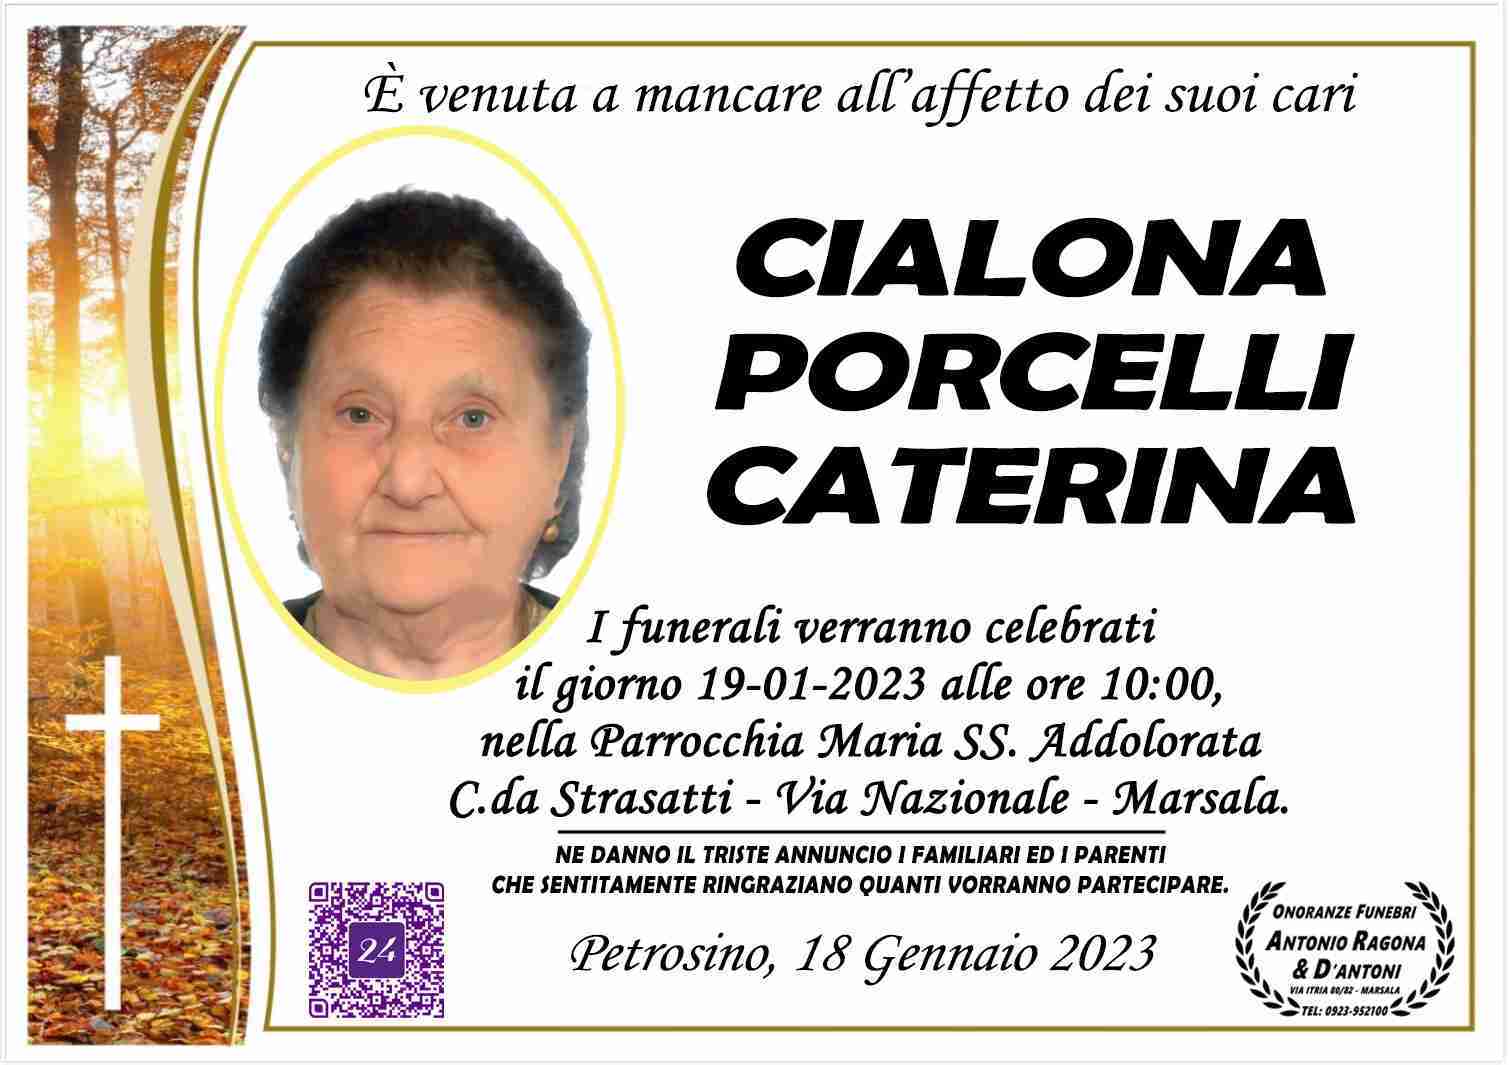 Caterina Cialona Porcelli